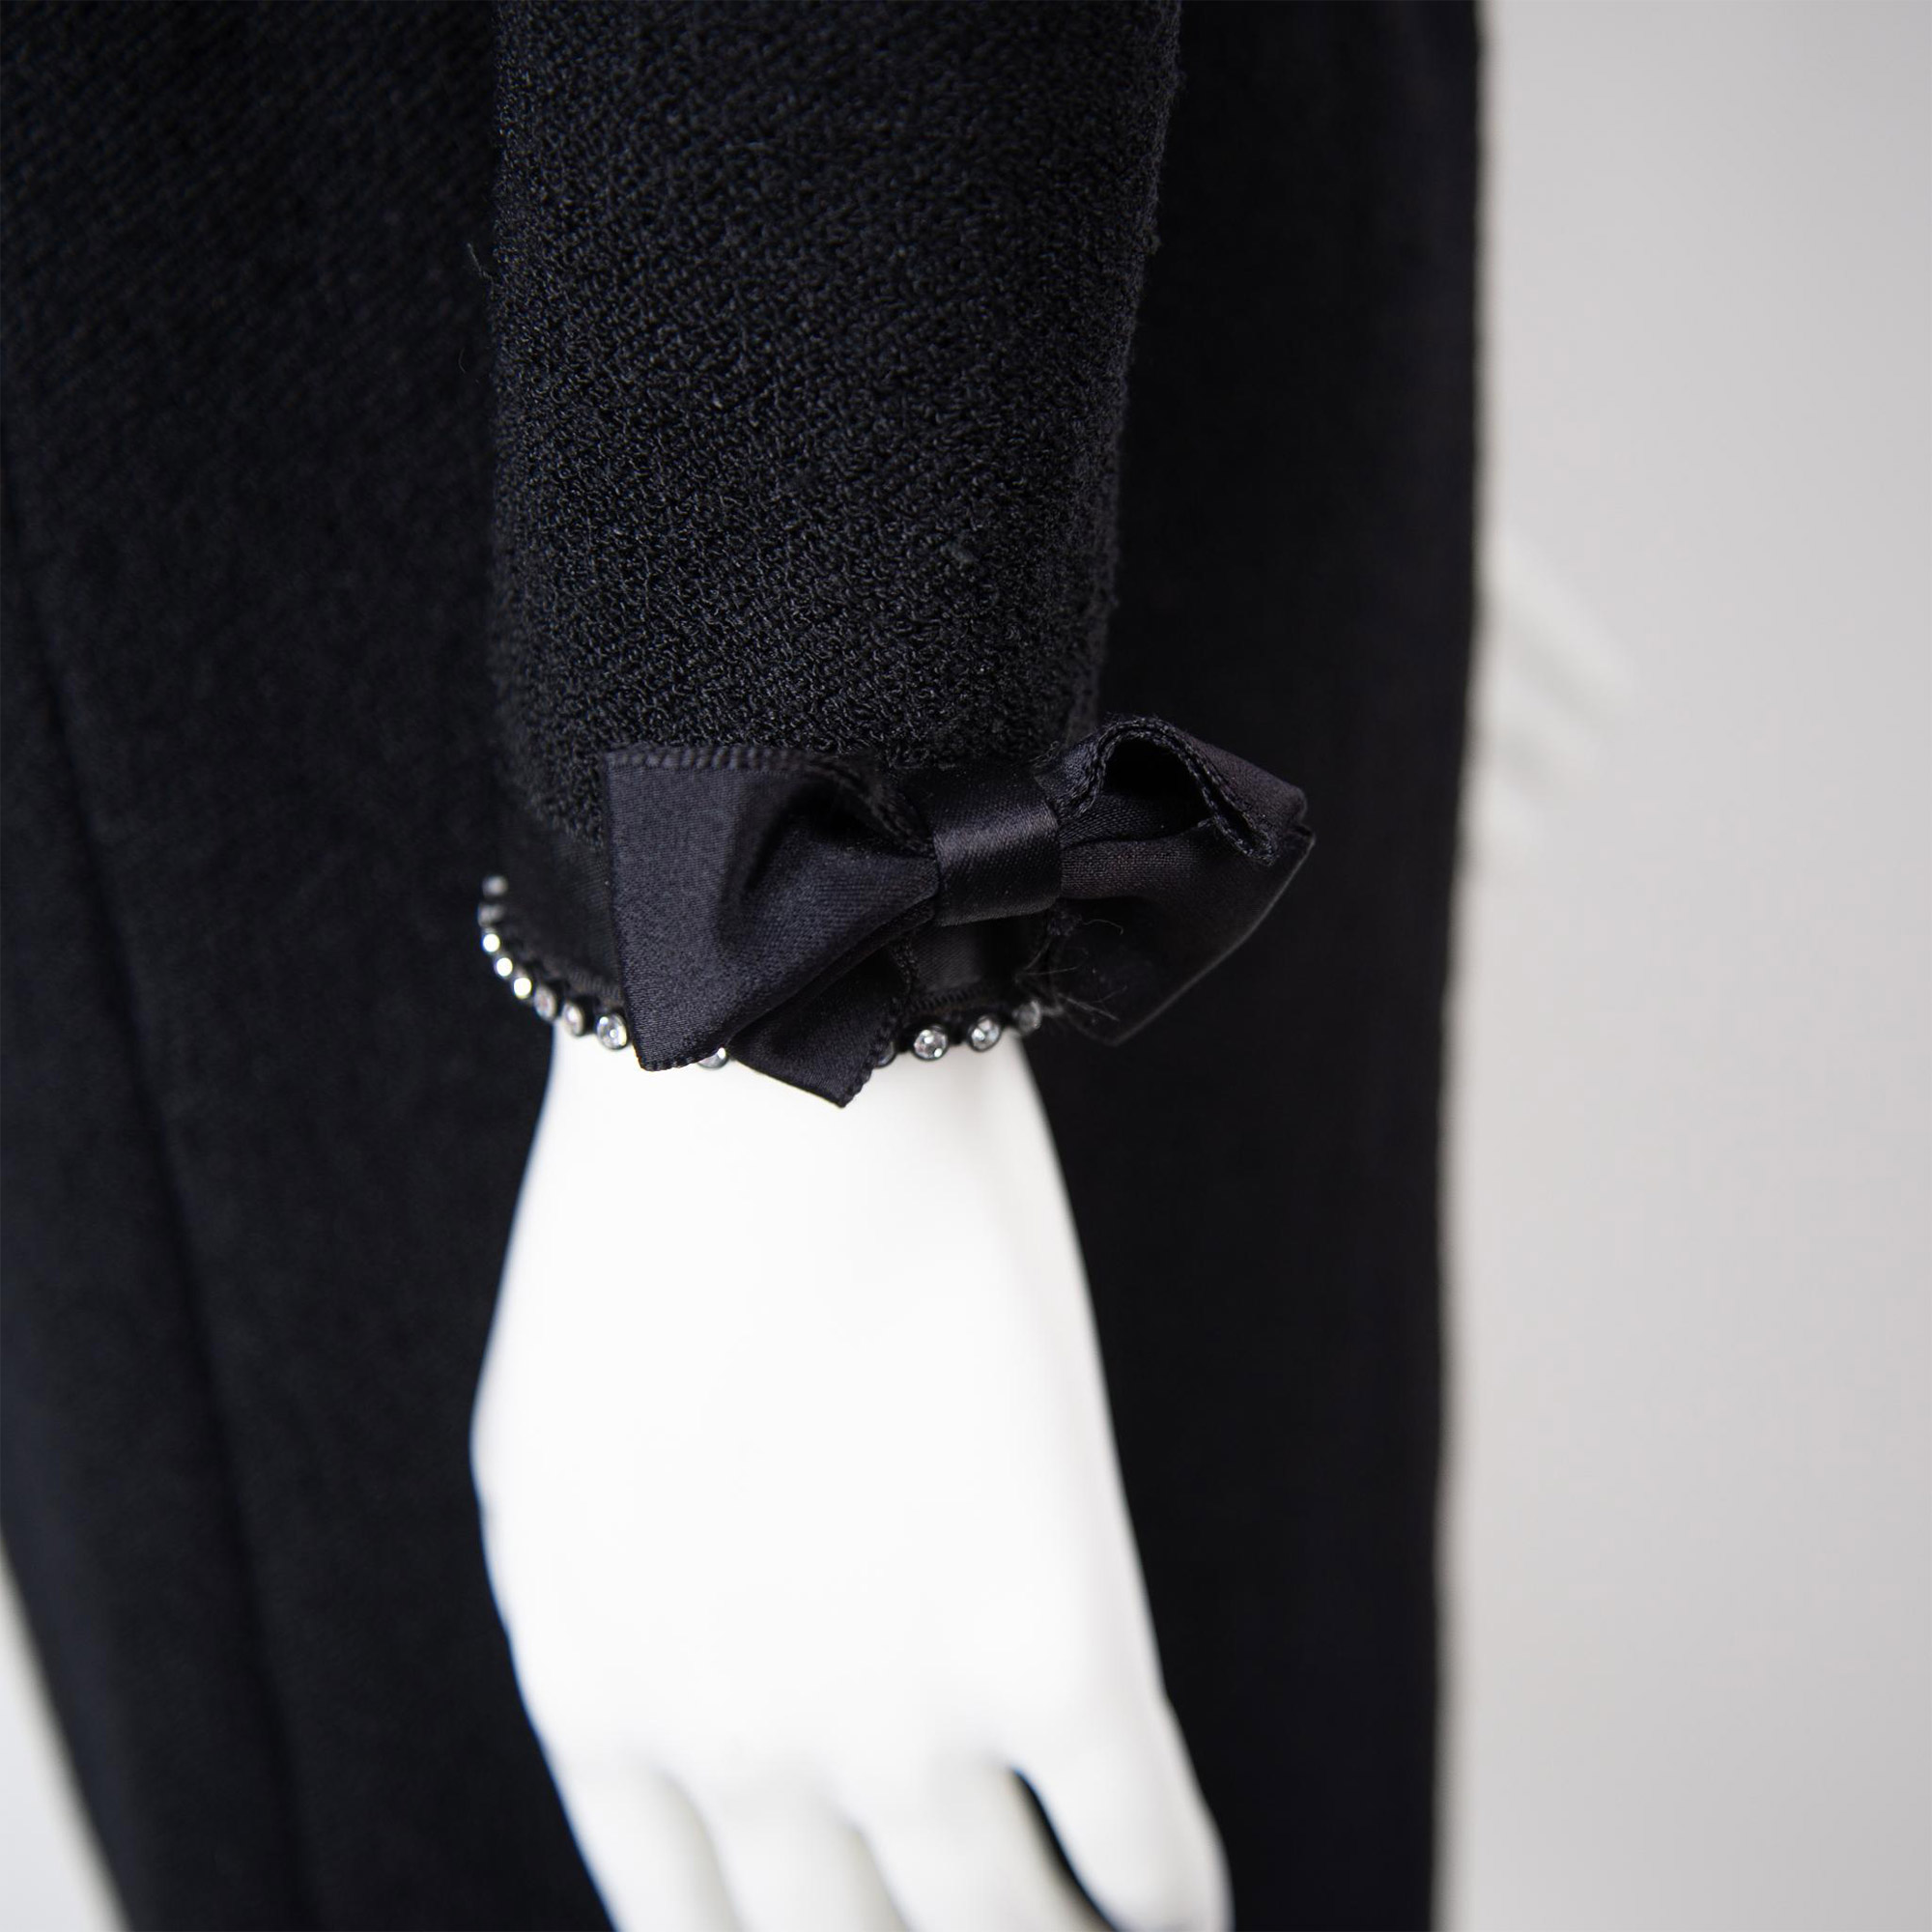 Adolfo for Neiman Marcus Rhinestone & Bow Knit Dress, Size Small - Image 7 of 8